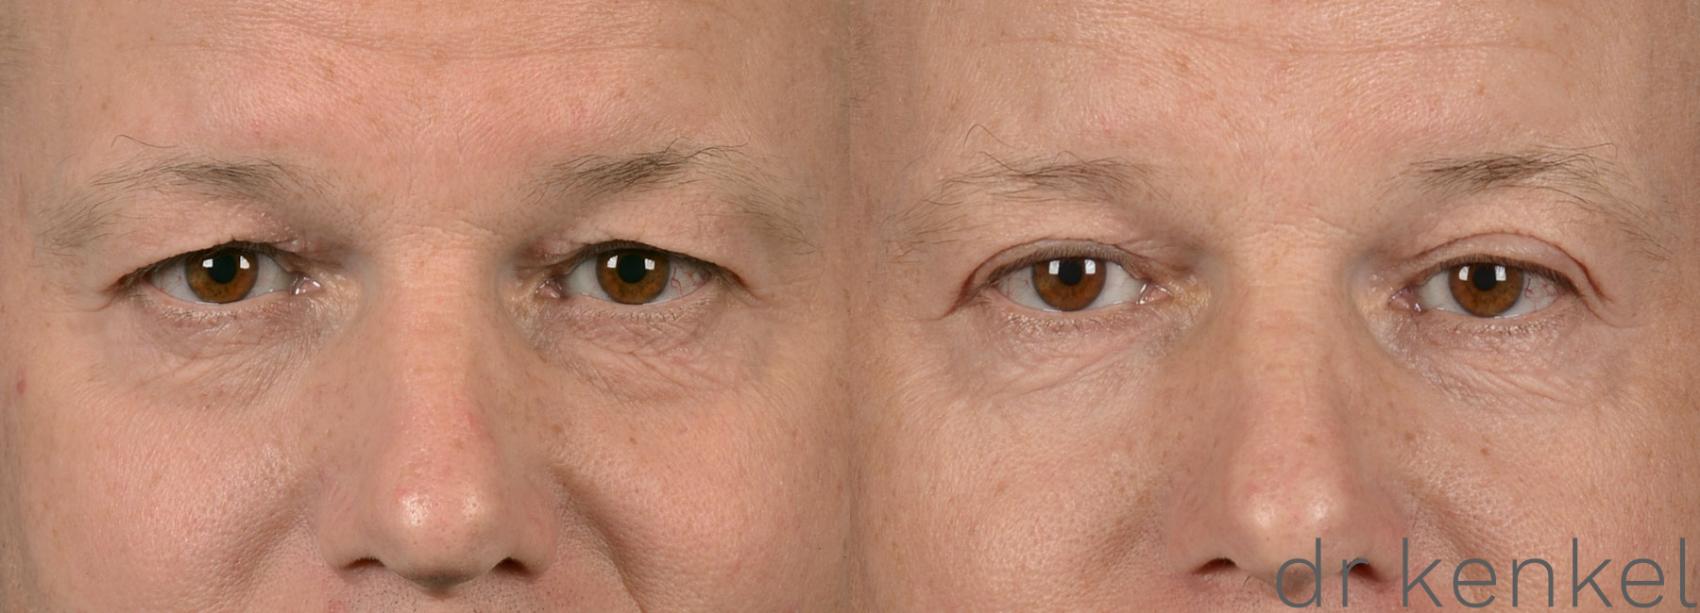 Before & After Eyelid Surgery Case 38 View #1 View in Dallas, Frisco, Fort Worth, McKinney, Prosper, Allen, Celina, Denton, Anna, TX